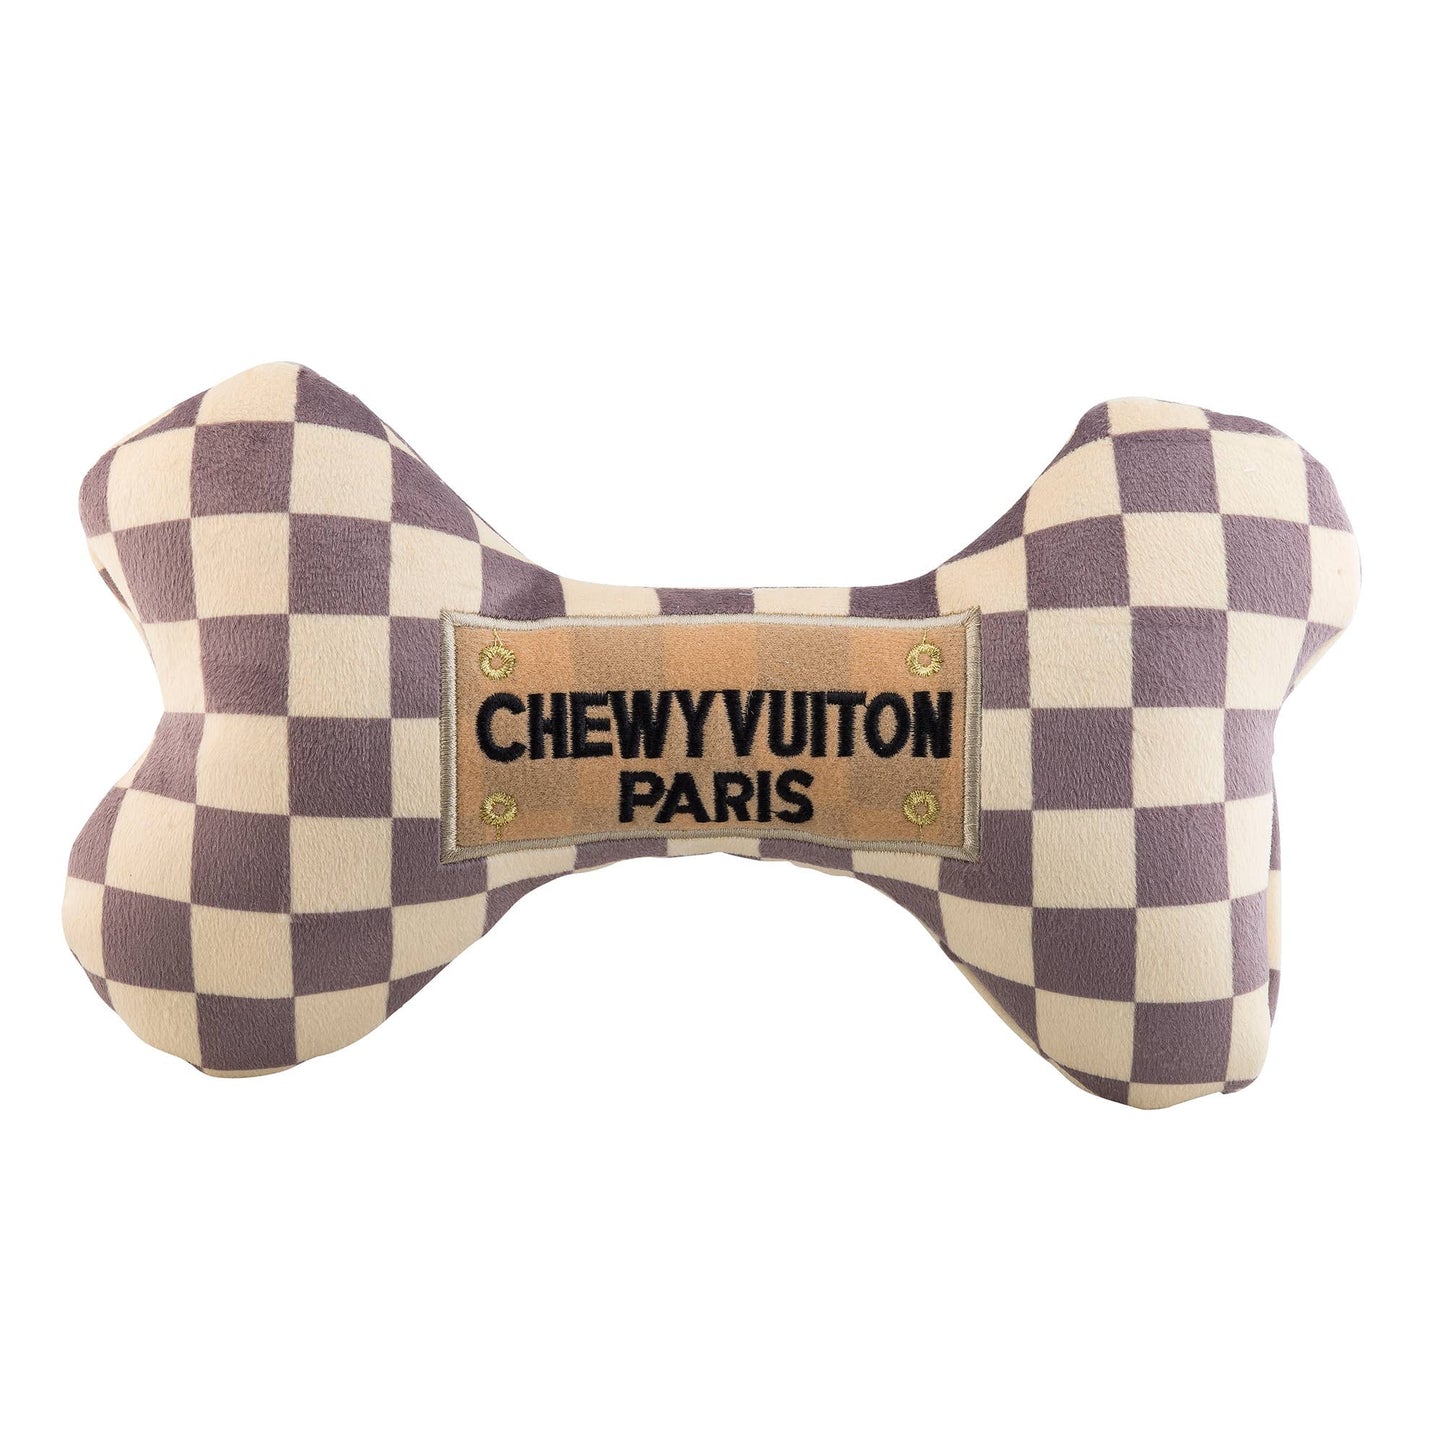 Checker Chewy Vuiton Bone